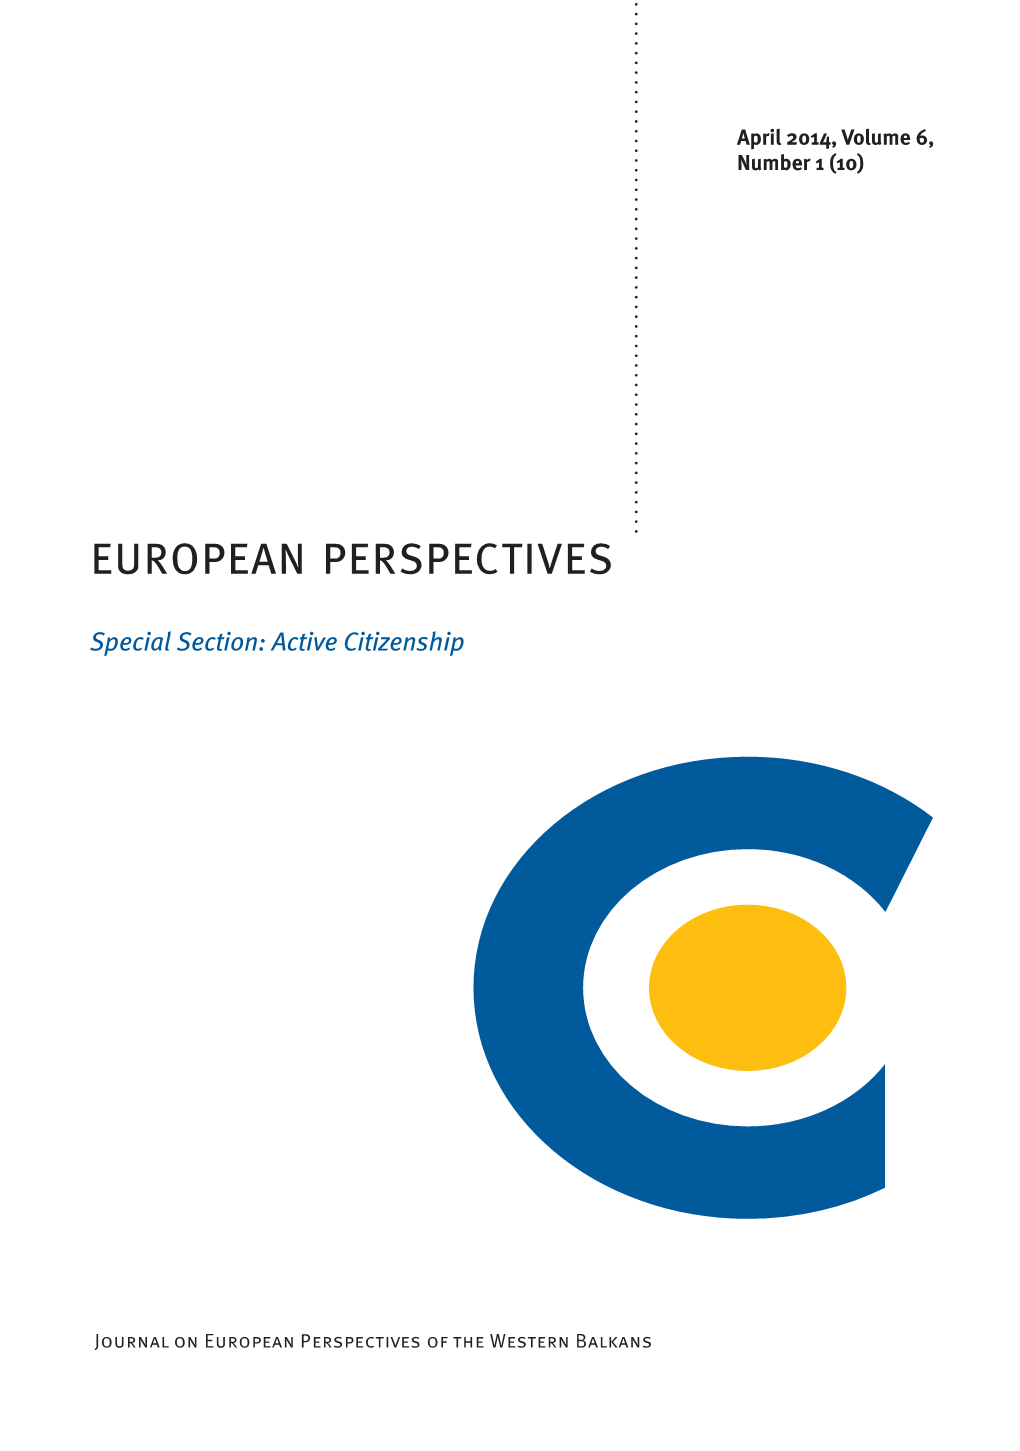 European Perspectives 2014, Volume 6, Number 1